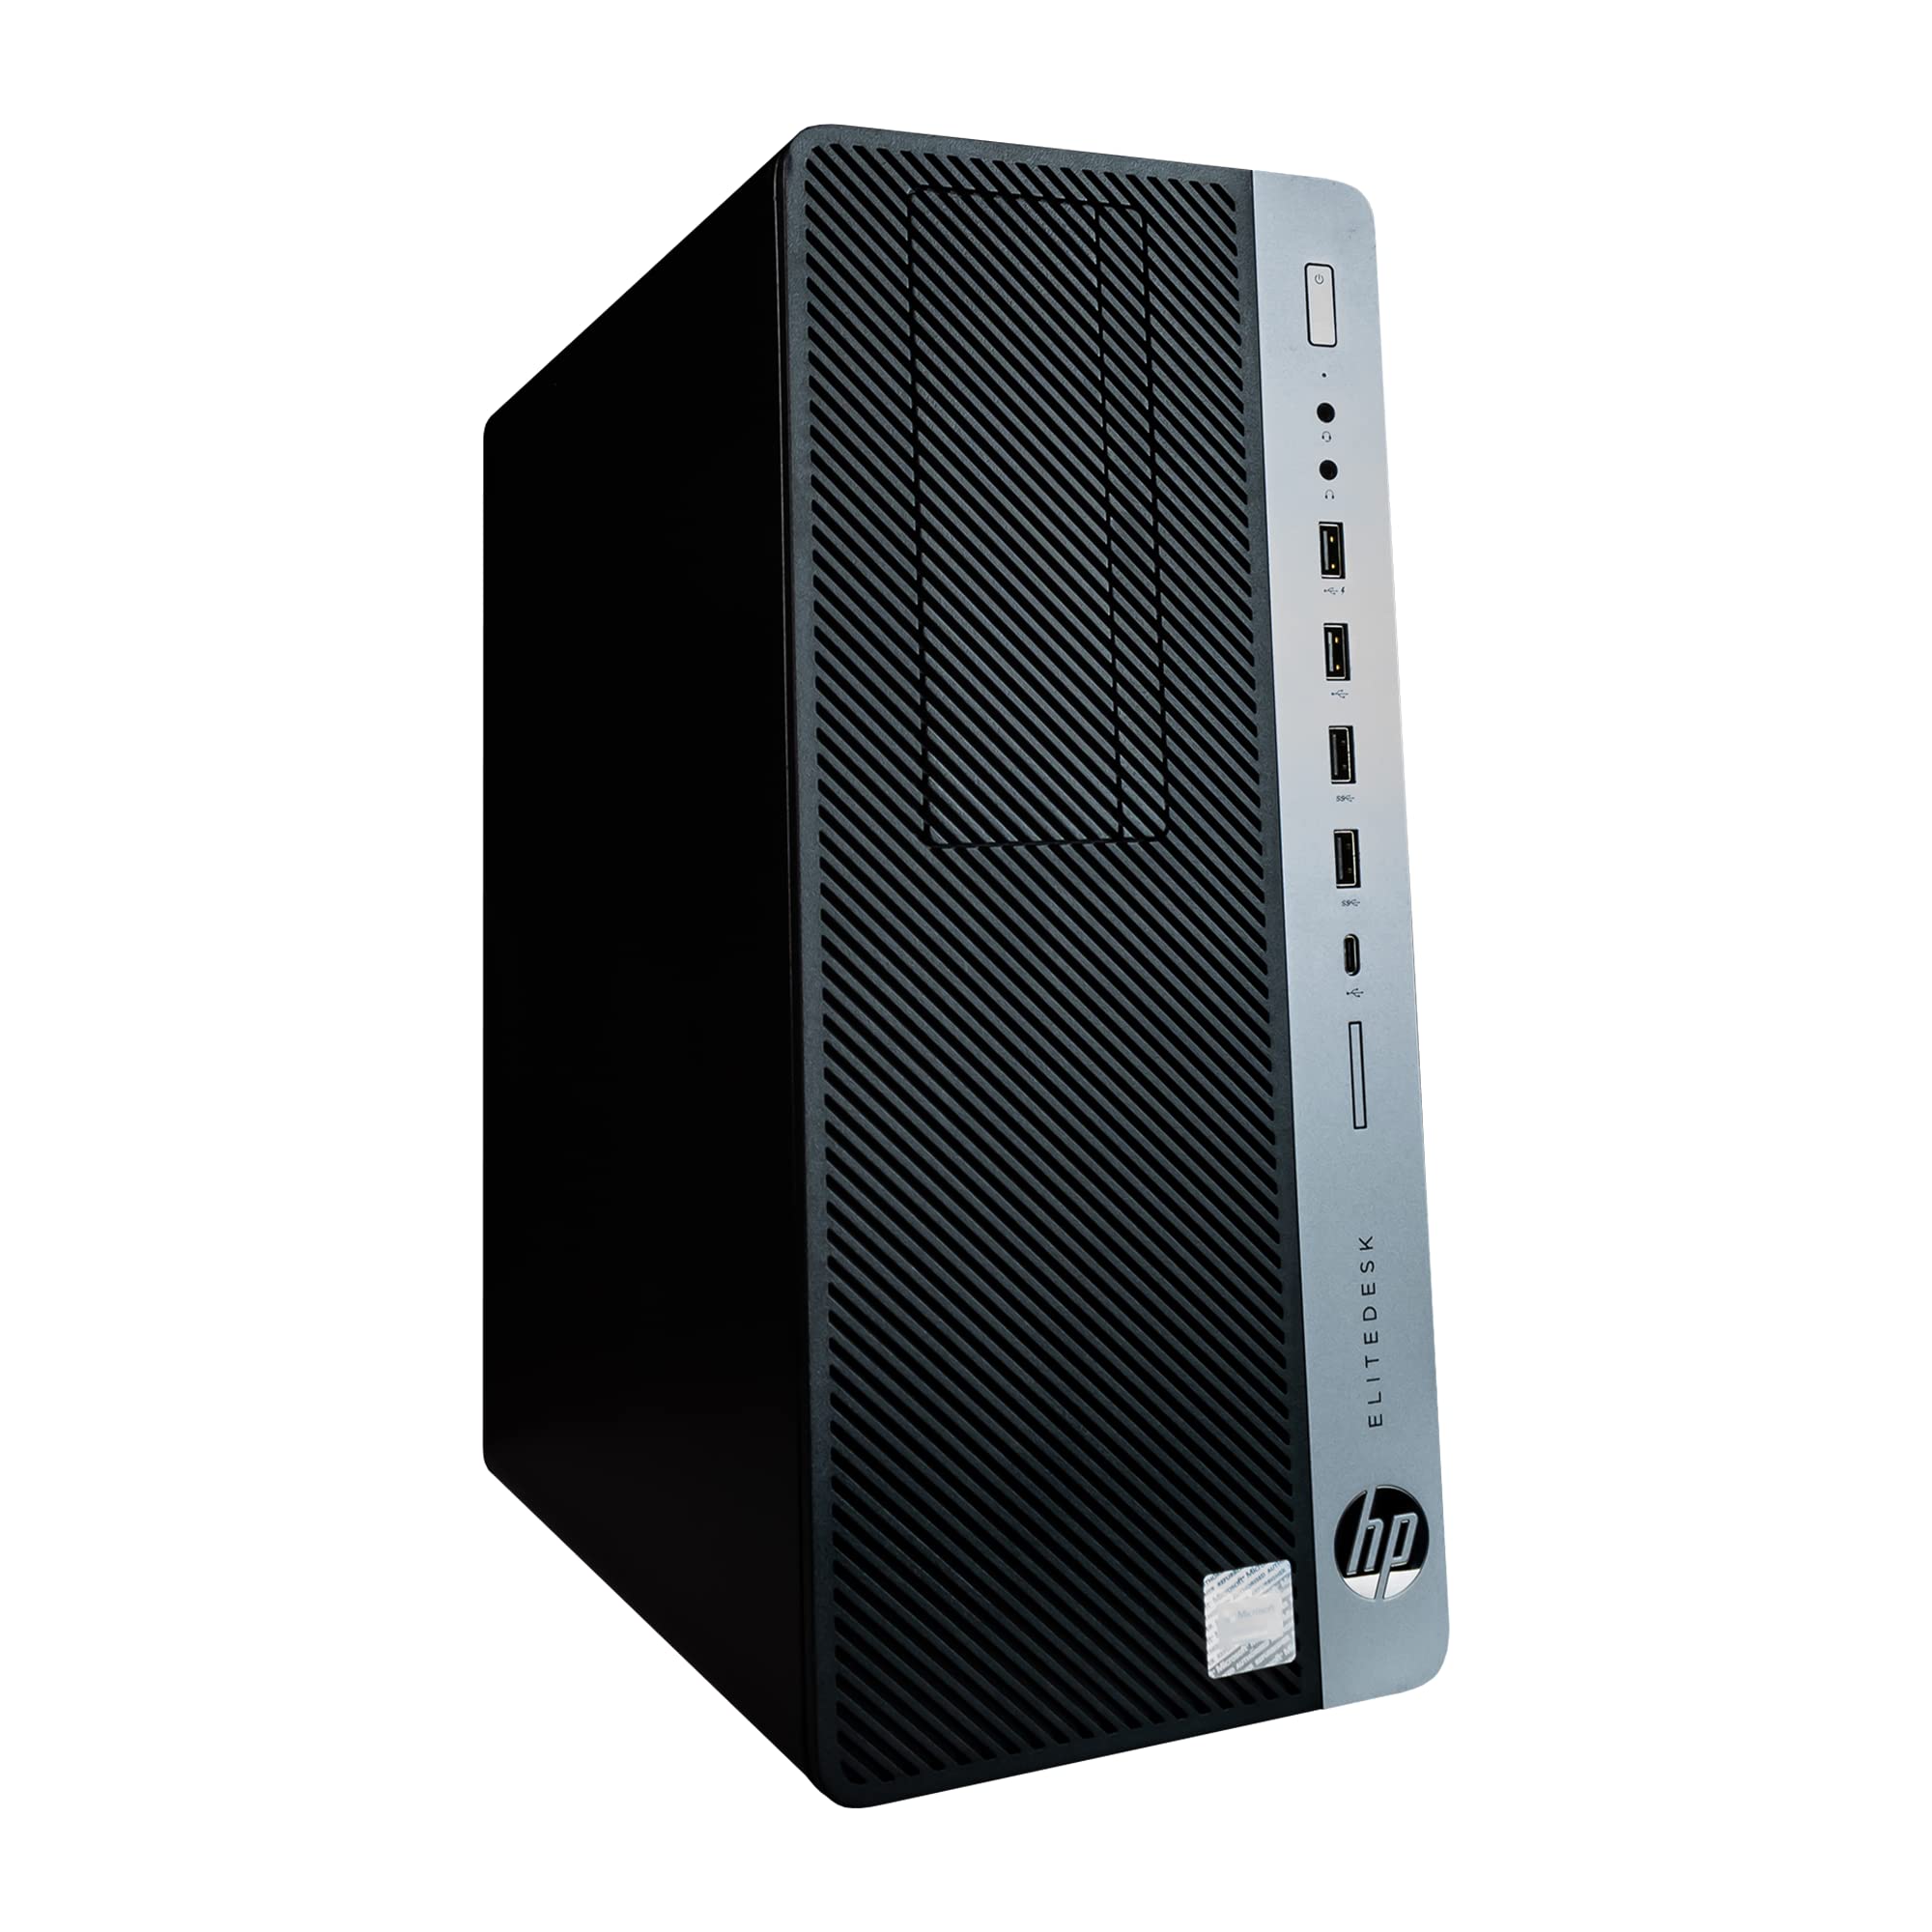 HP EliteDesk 800 G3 Desktop Computer | Workstation PC | Quad Core Intel i7 (4.2GHz Turbo) | 32GB DDR4 RAM | 500GB SSD Solid State + 4TB HDD | WiFi-5G + Bluetooth | Win10 Pro | 800G3 Tower (Renewed)